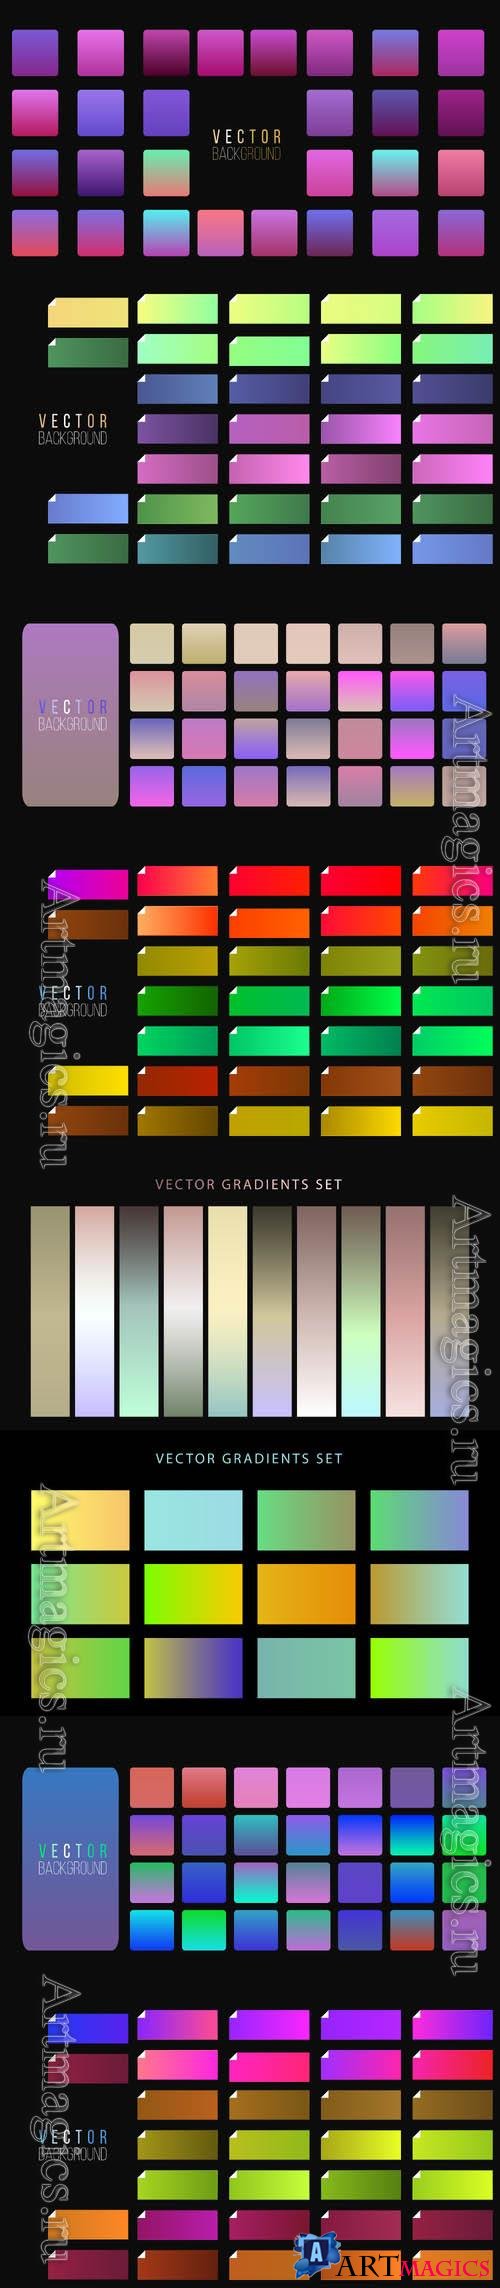 Colorful gradients vector big set